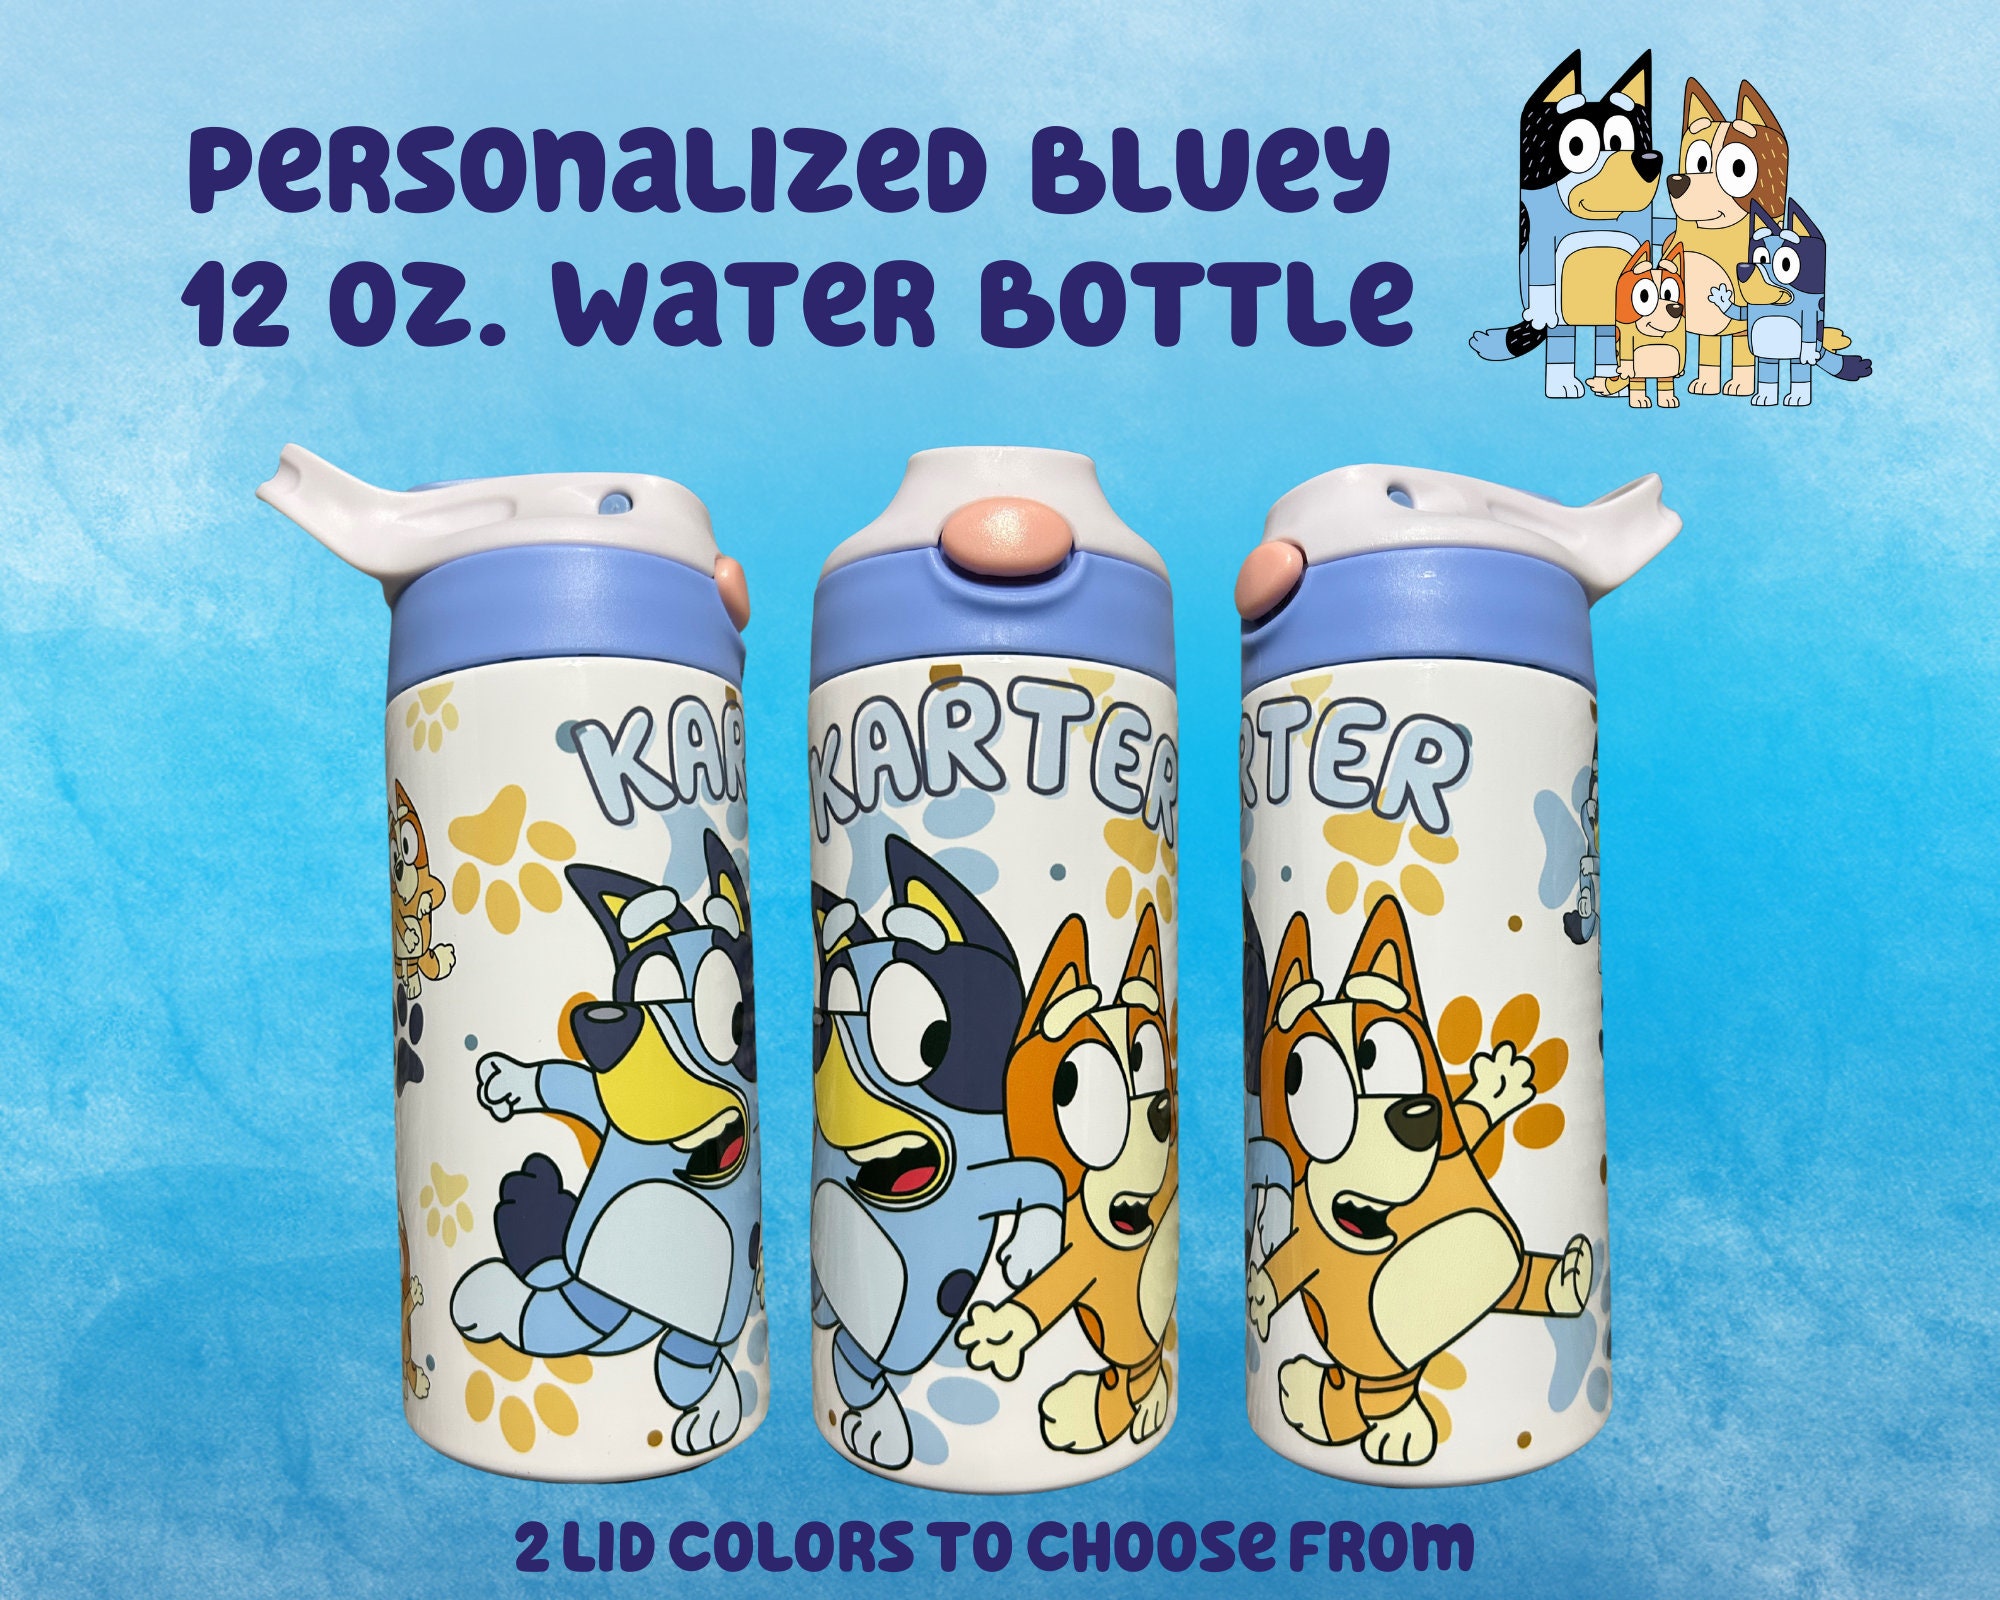 Buy Bluey 473ml Stainless Steel Bottle (Blue Lid) Online